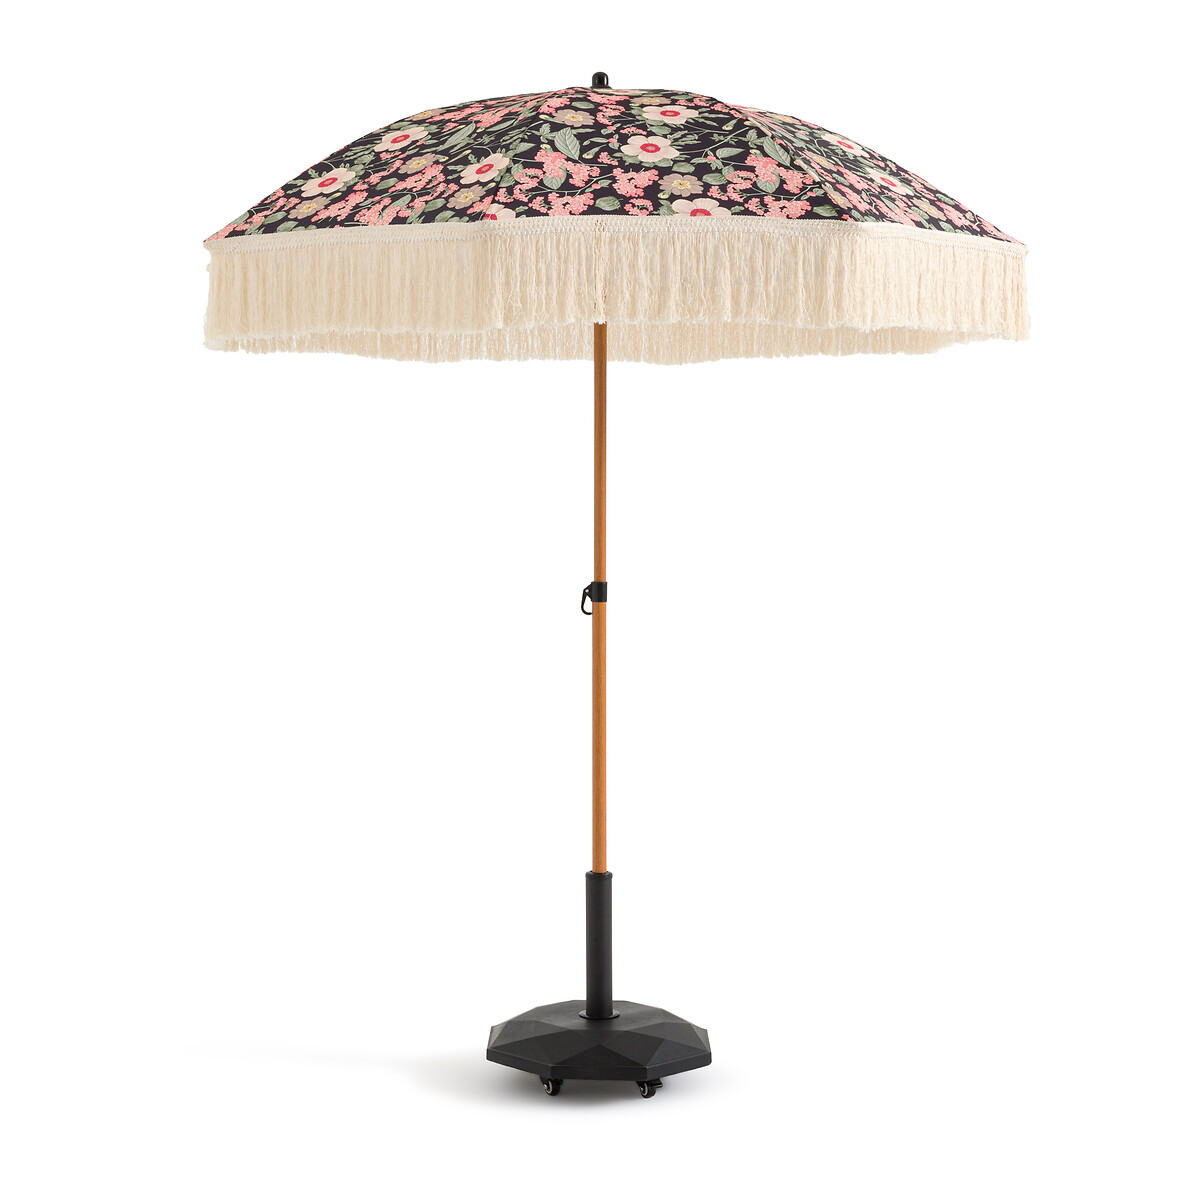 LA REDOUTE INTERIEURS Bedrukte parasol met franjes, Larna